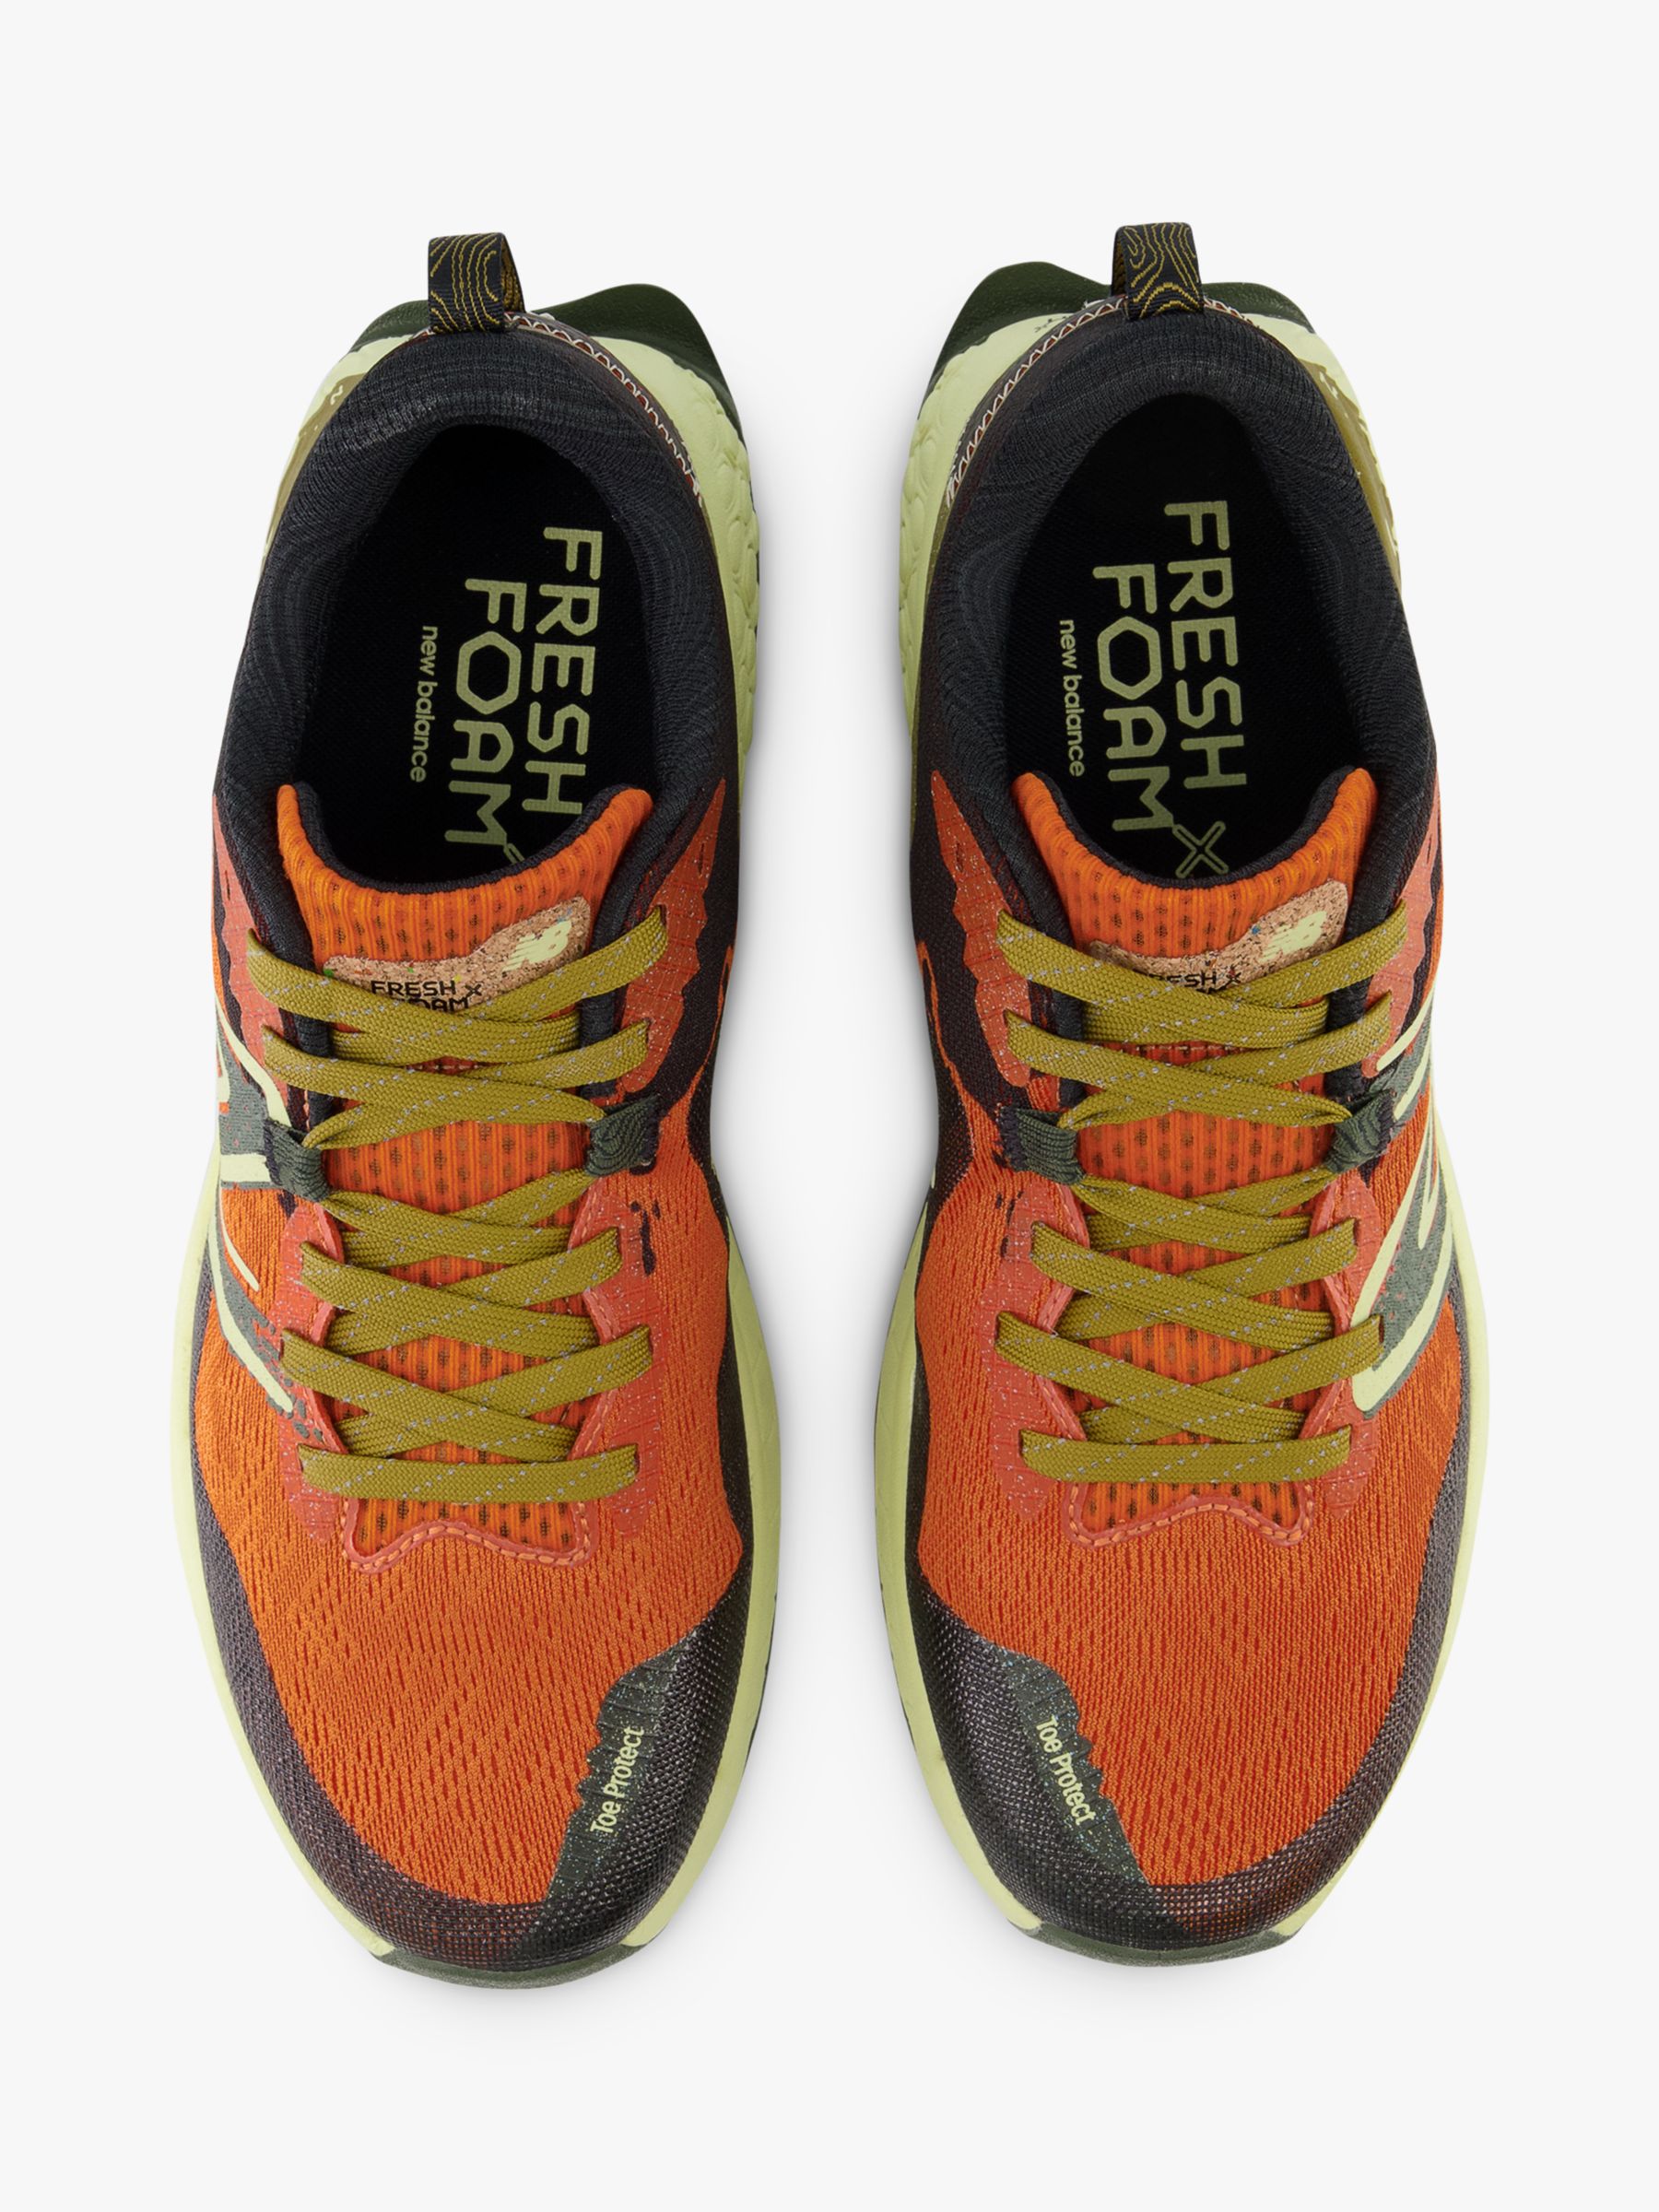 New Balance Fresh Foam X Hierro v7 Men's Trail Running Shoes, Cayenne, 7